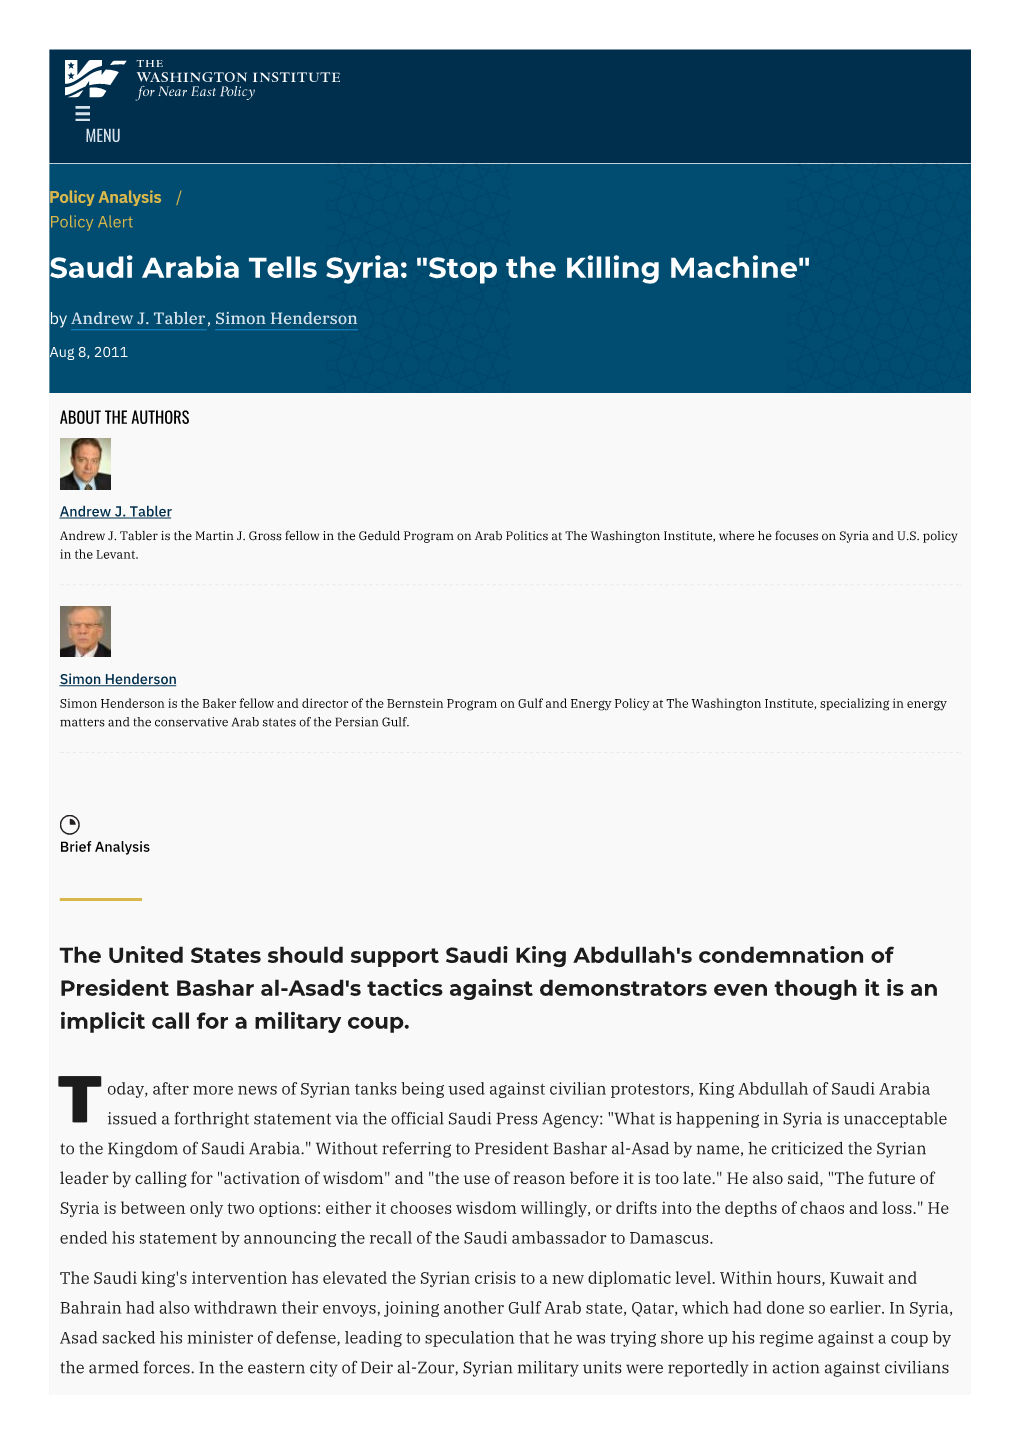 Saudi Arabia Tells Syria: "Stop the Killing Machine" | the Washington Institute